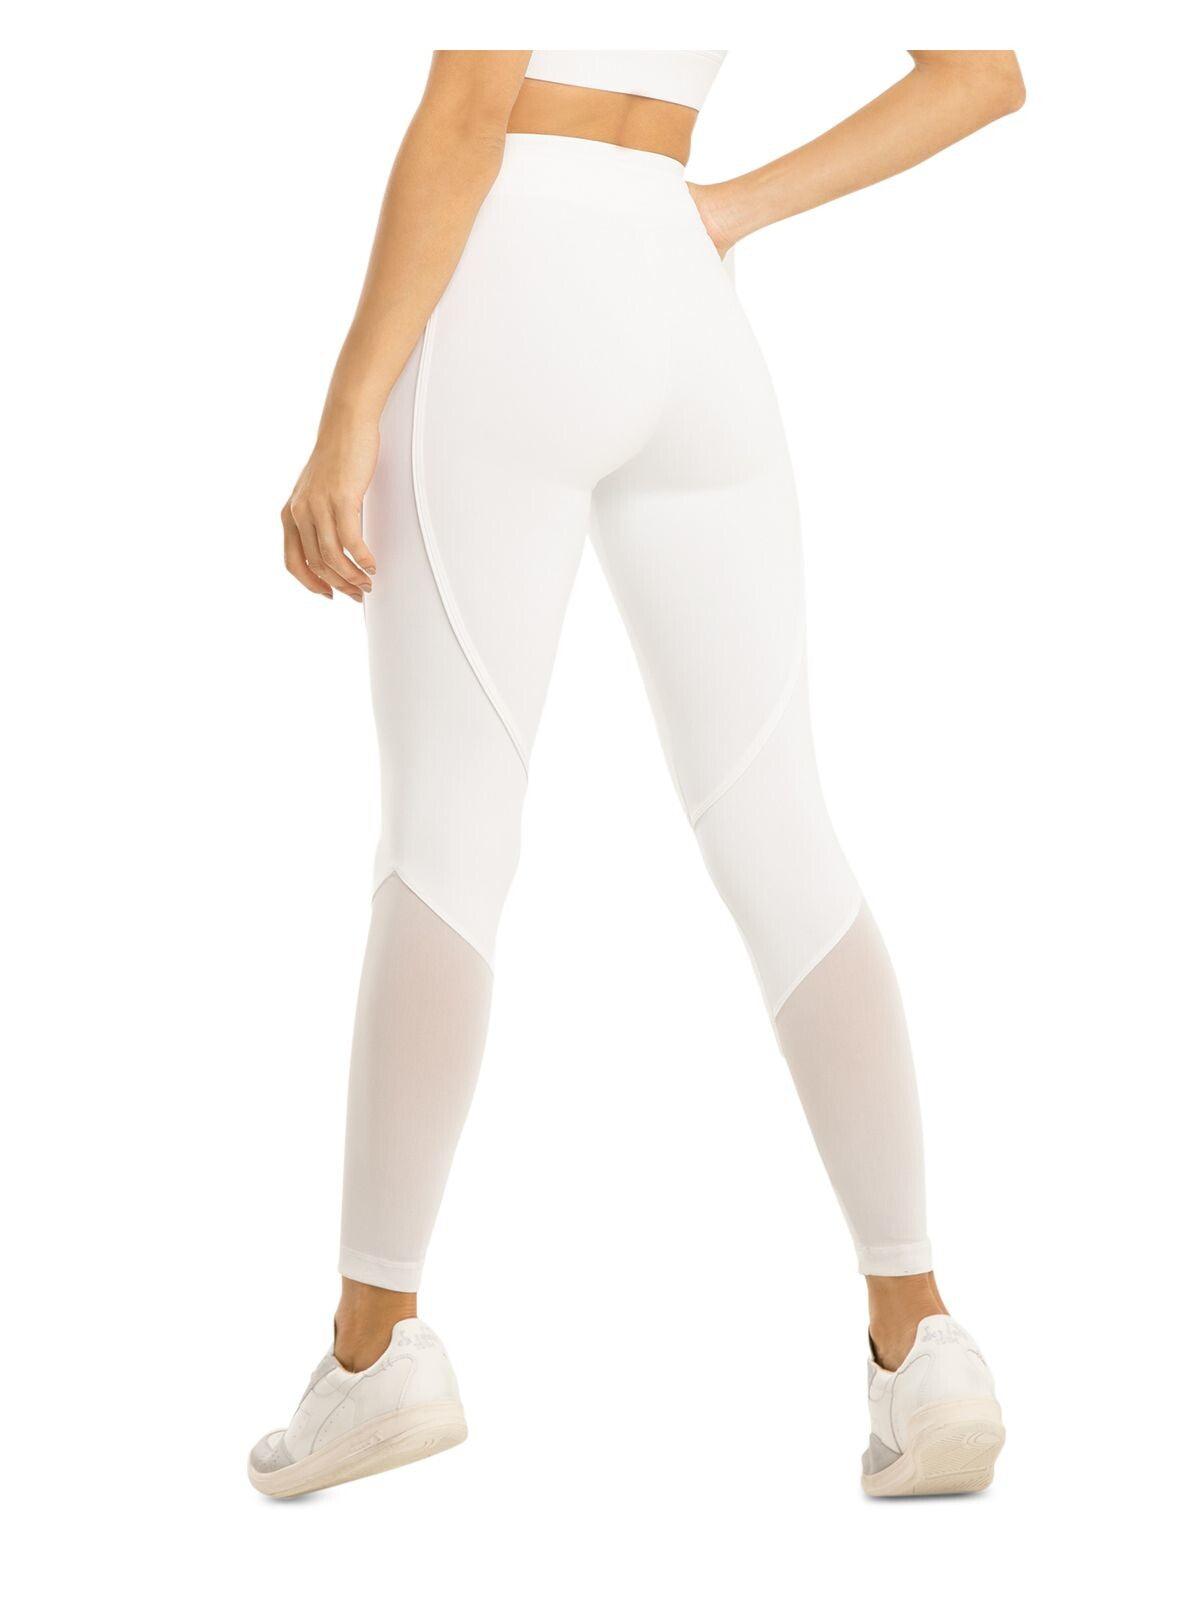 KORAL Womens White Stretch Active Wear High Waist Leggings XL